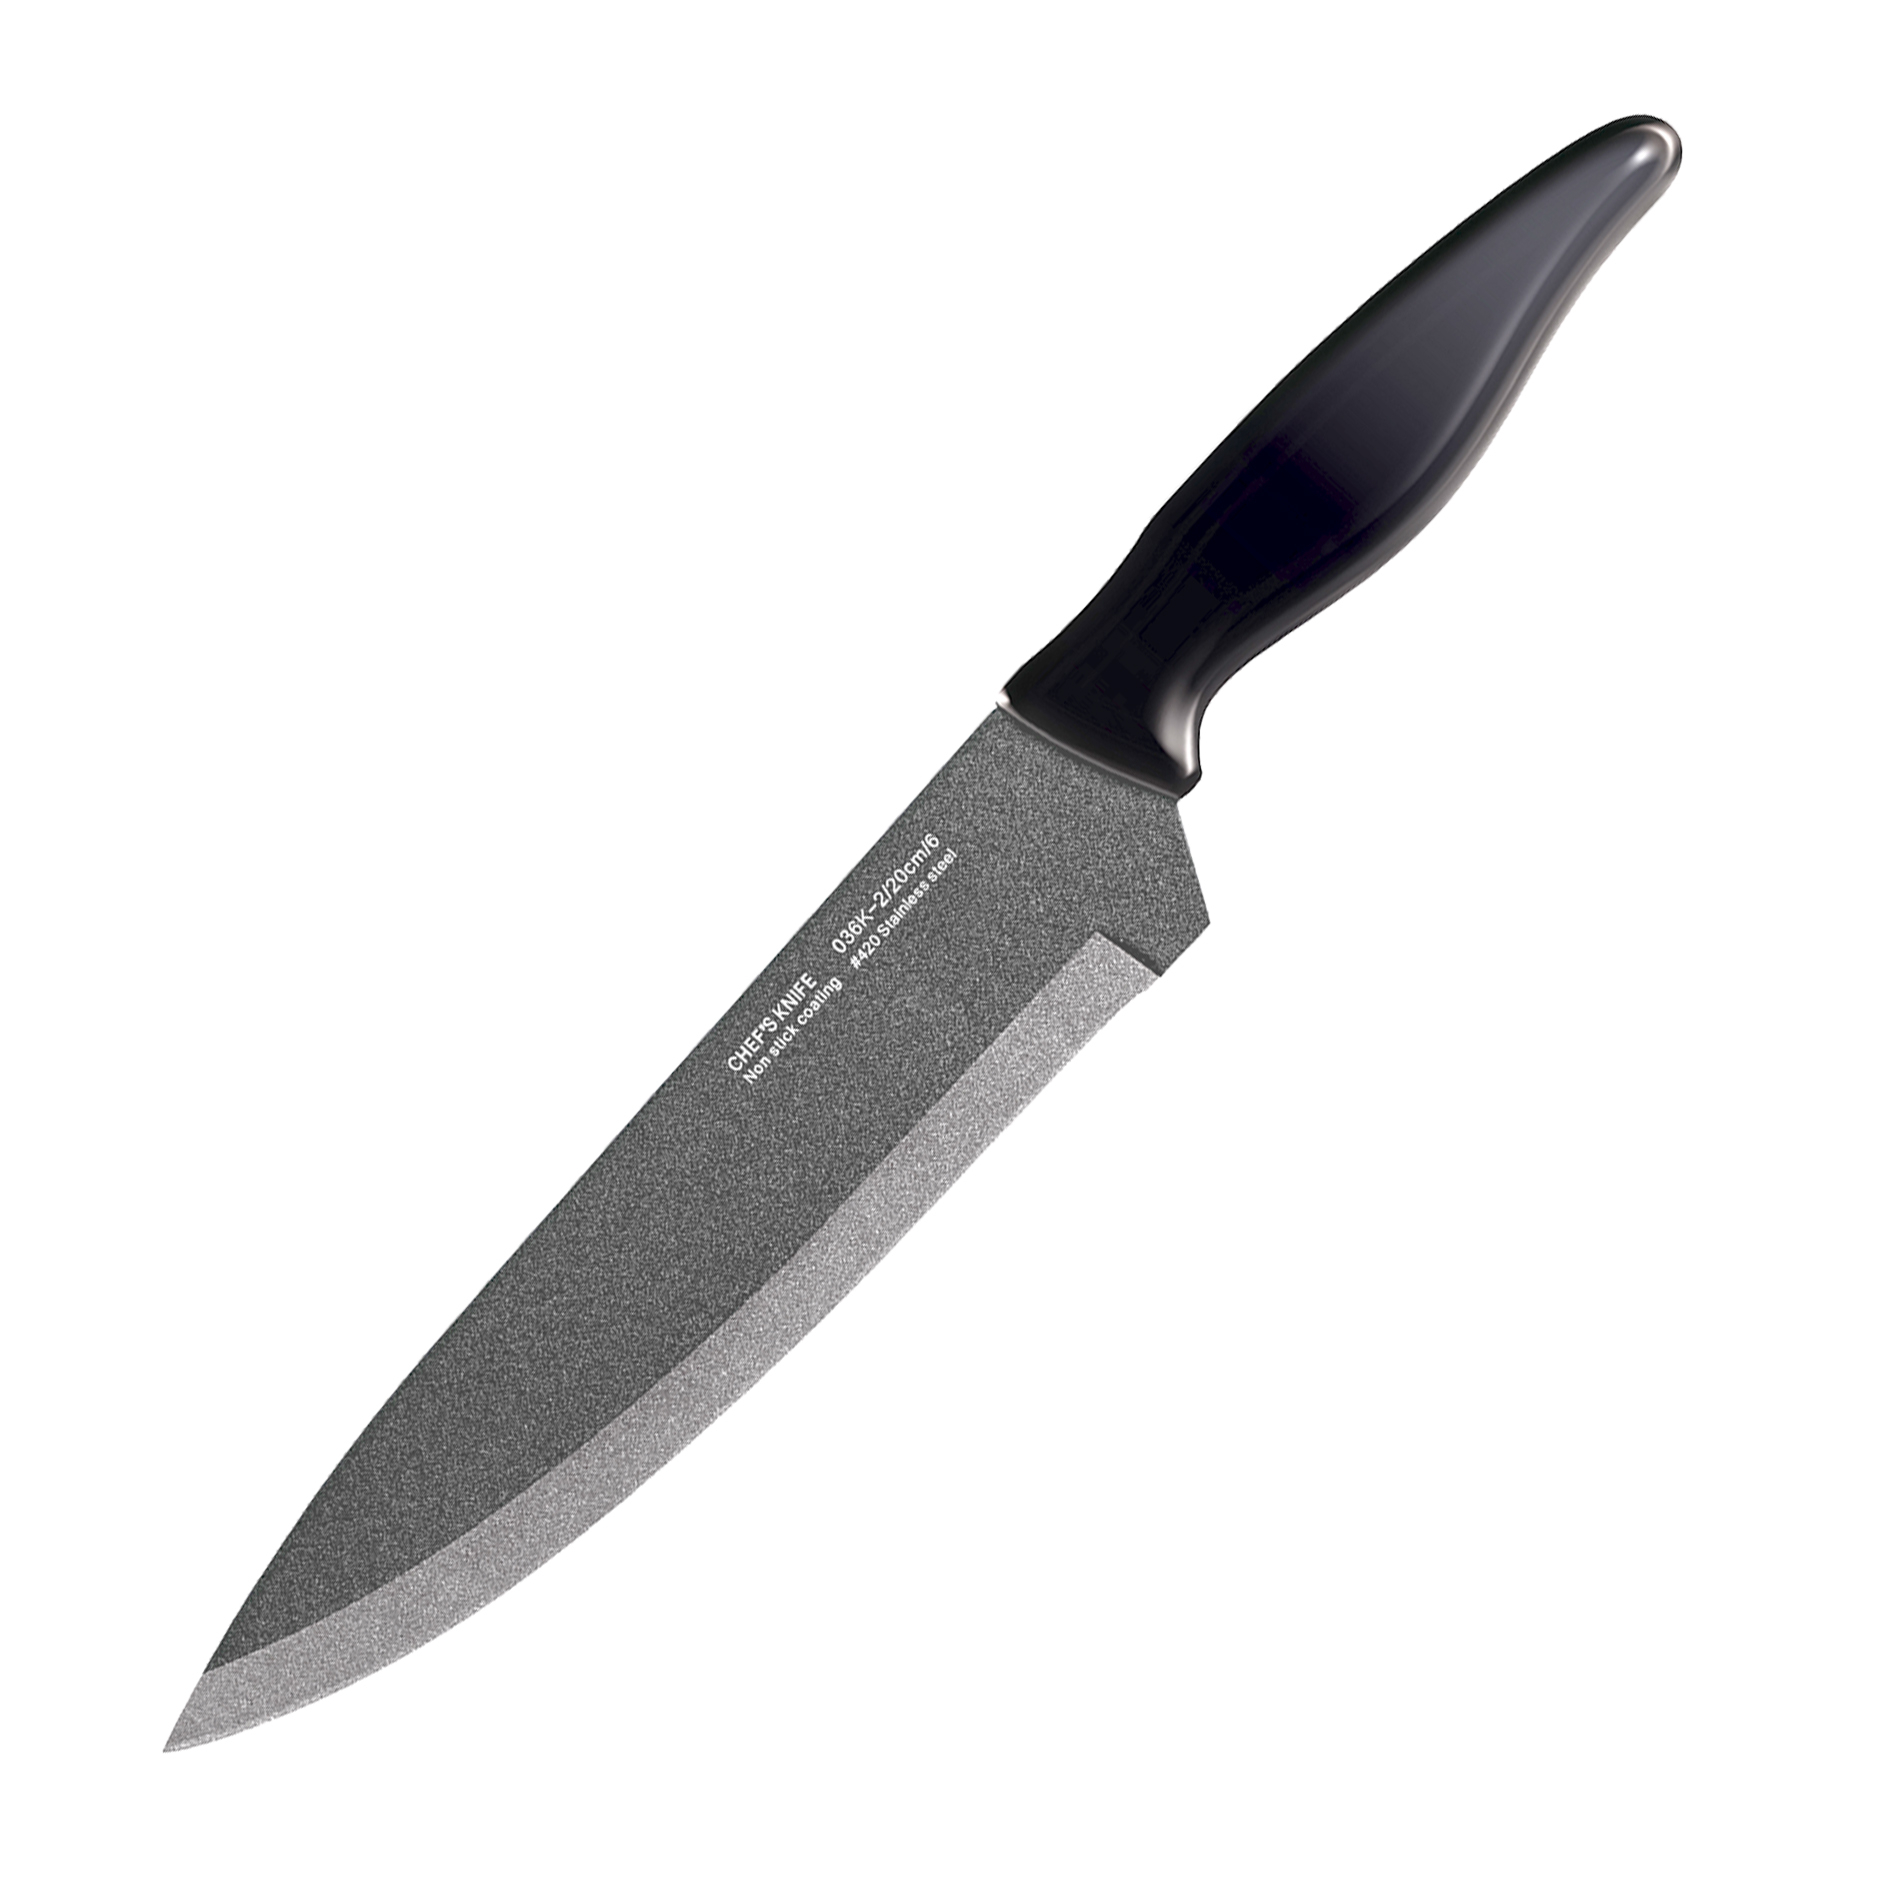 Smile SNS-3 Tacoma Juego de 5 cuchillos de cocina de acero inoxidable con recubrimiento antiadherente, bloque redondo linea moderna, negro 